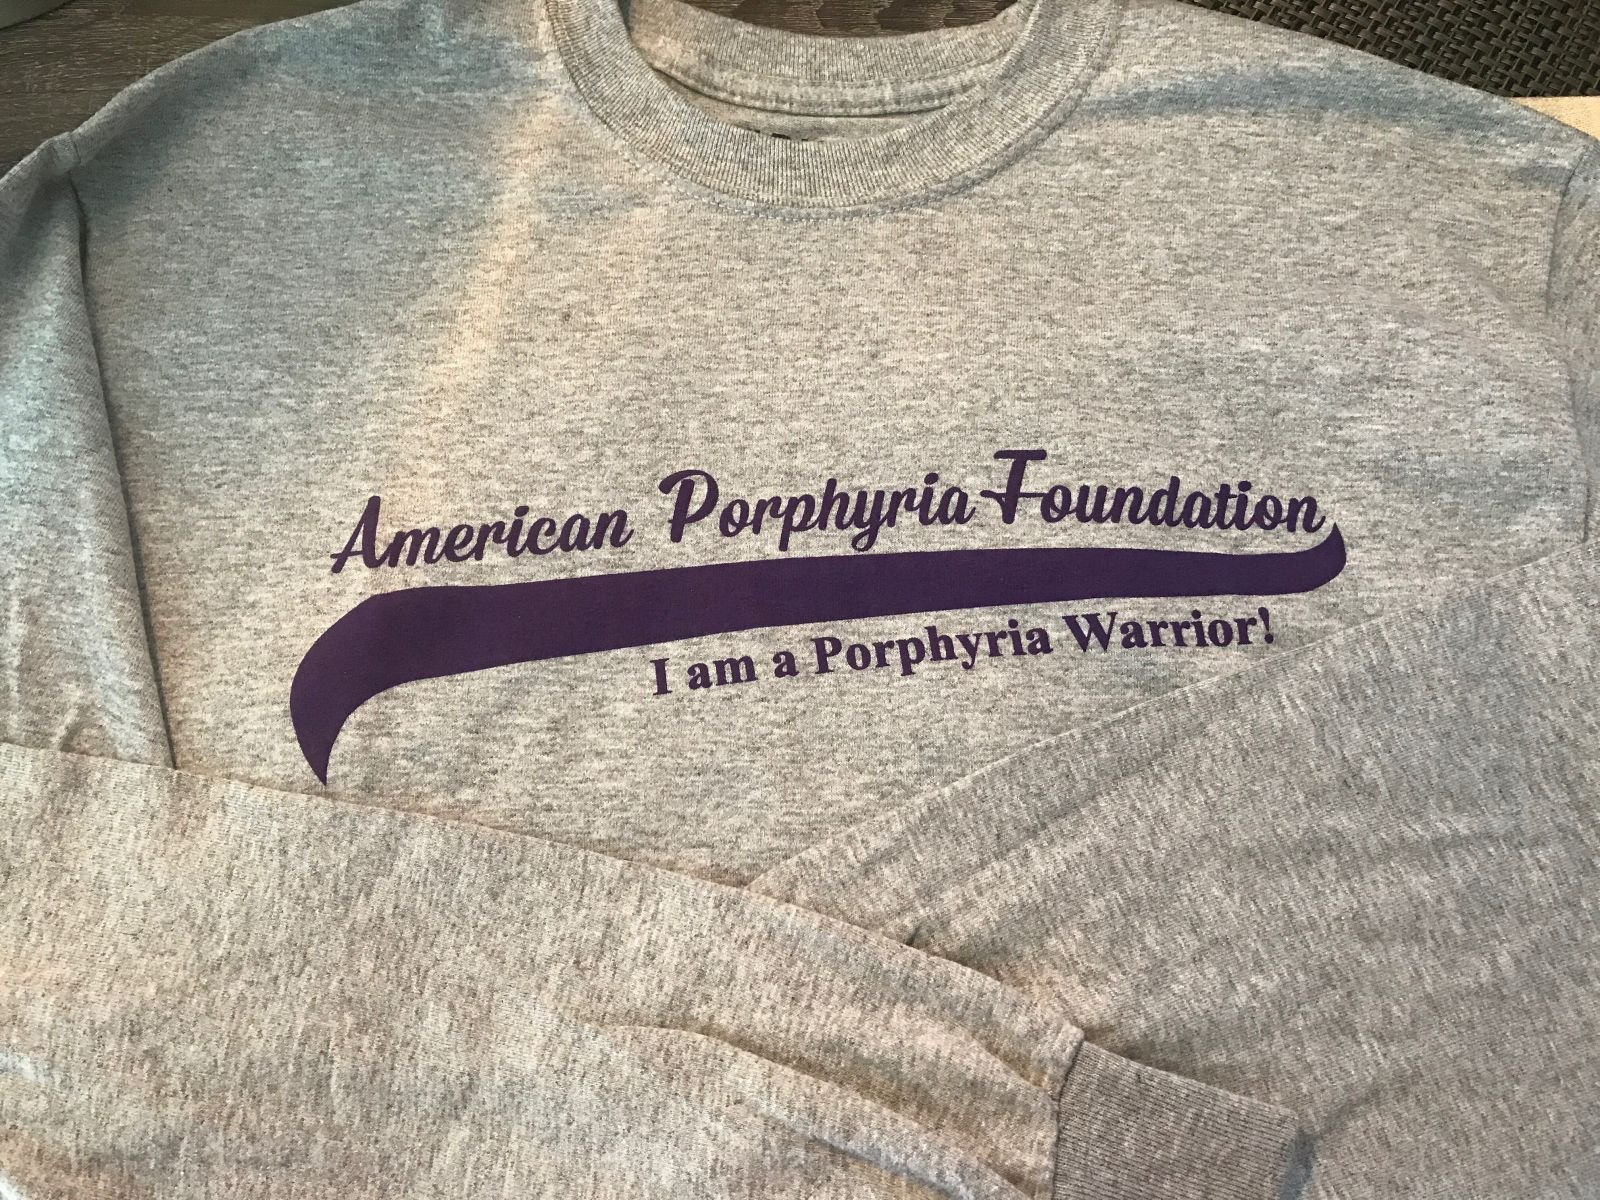 Porphyria slogan on T-shirt